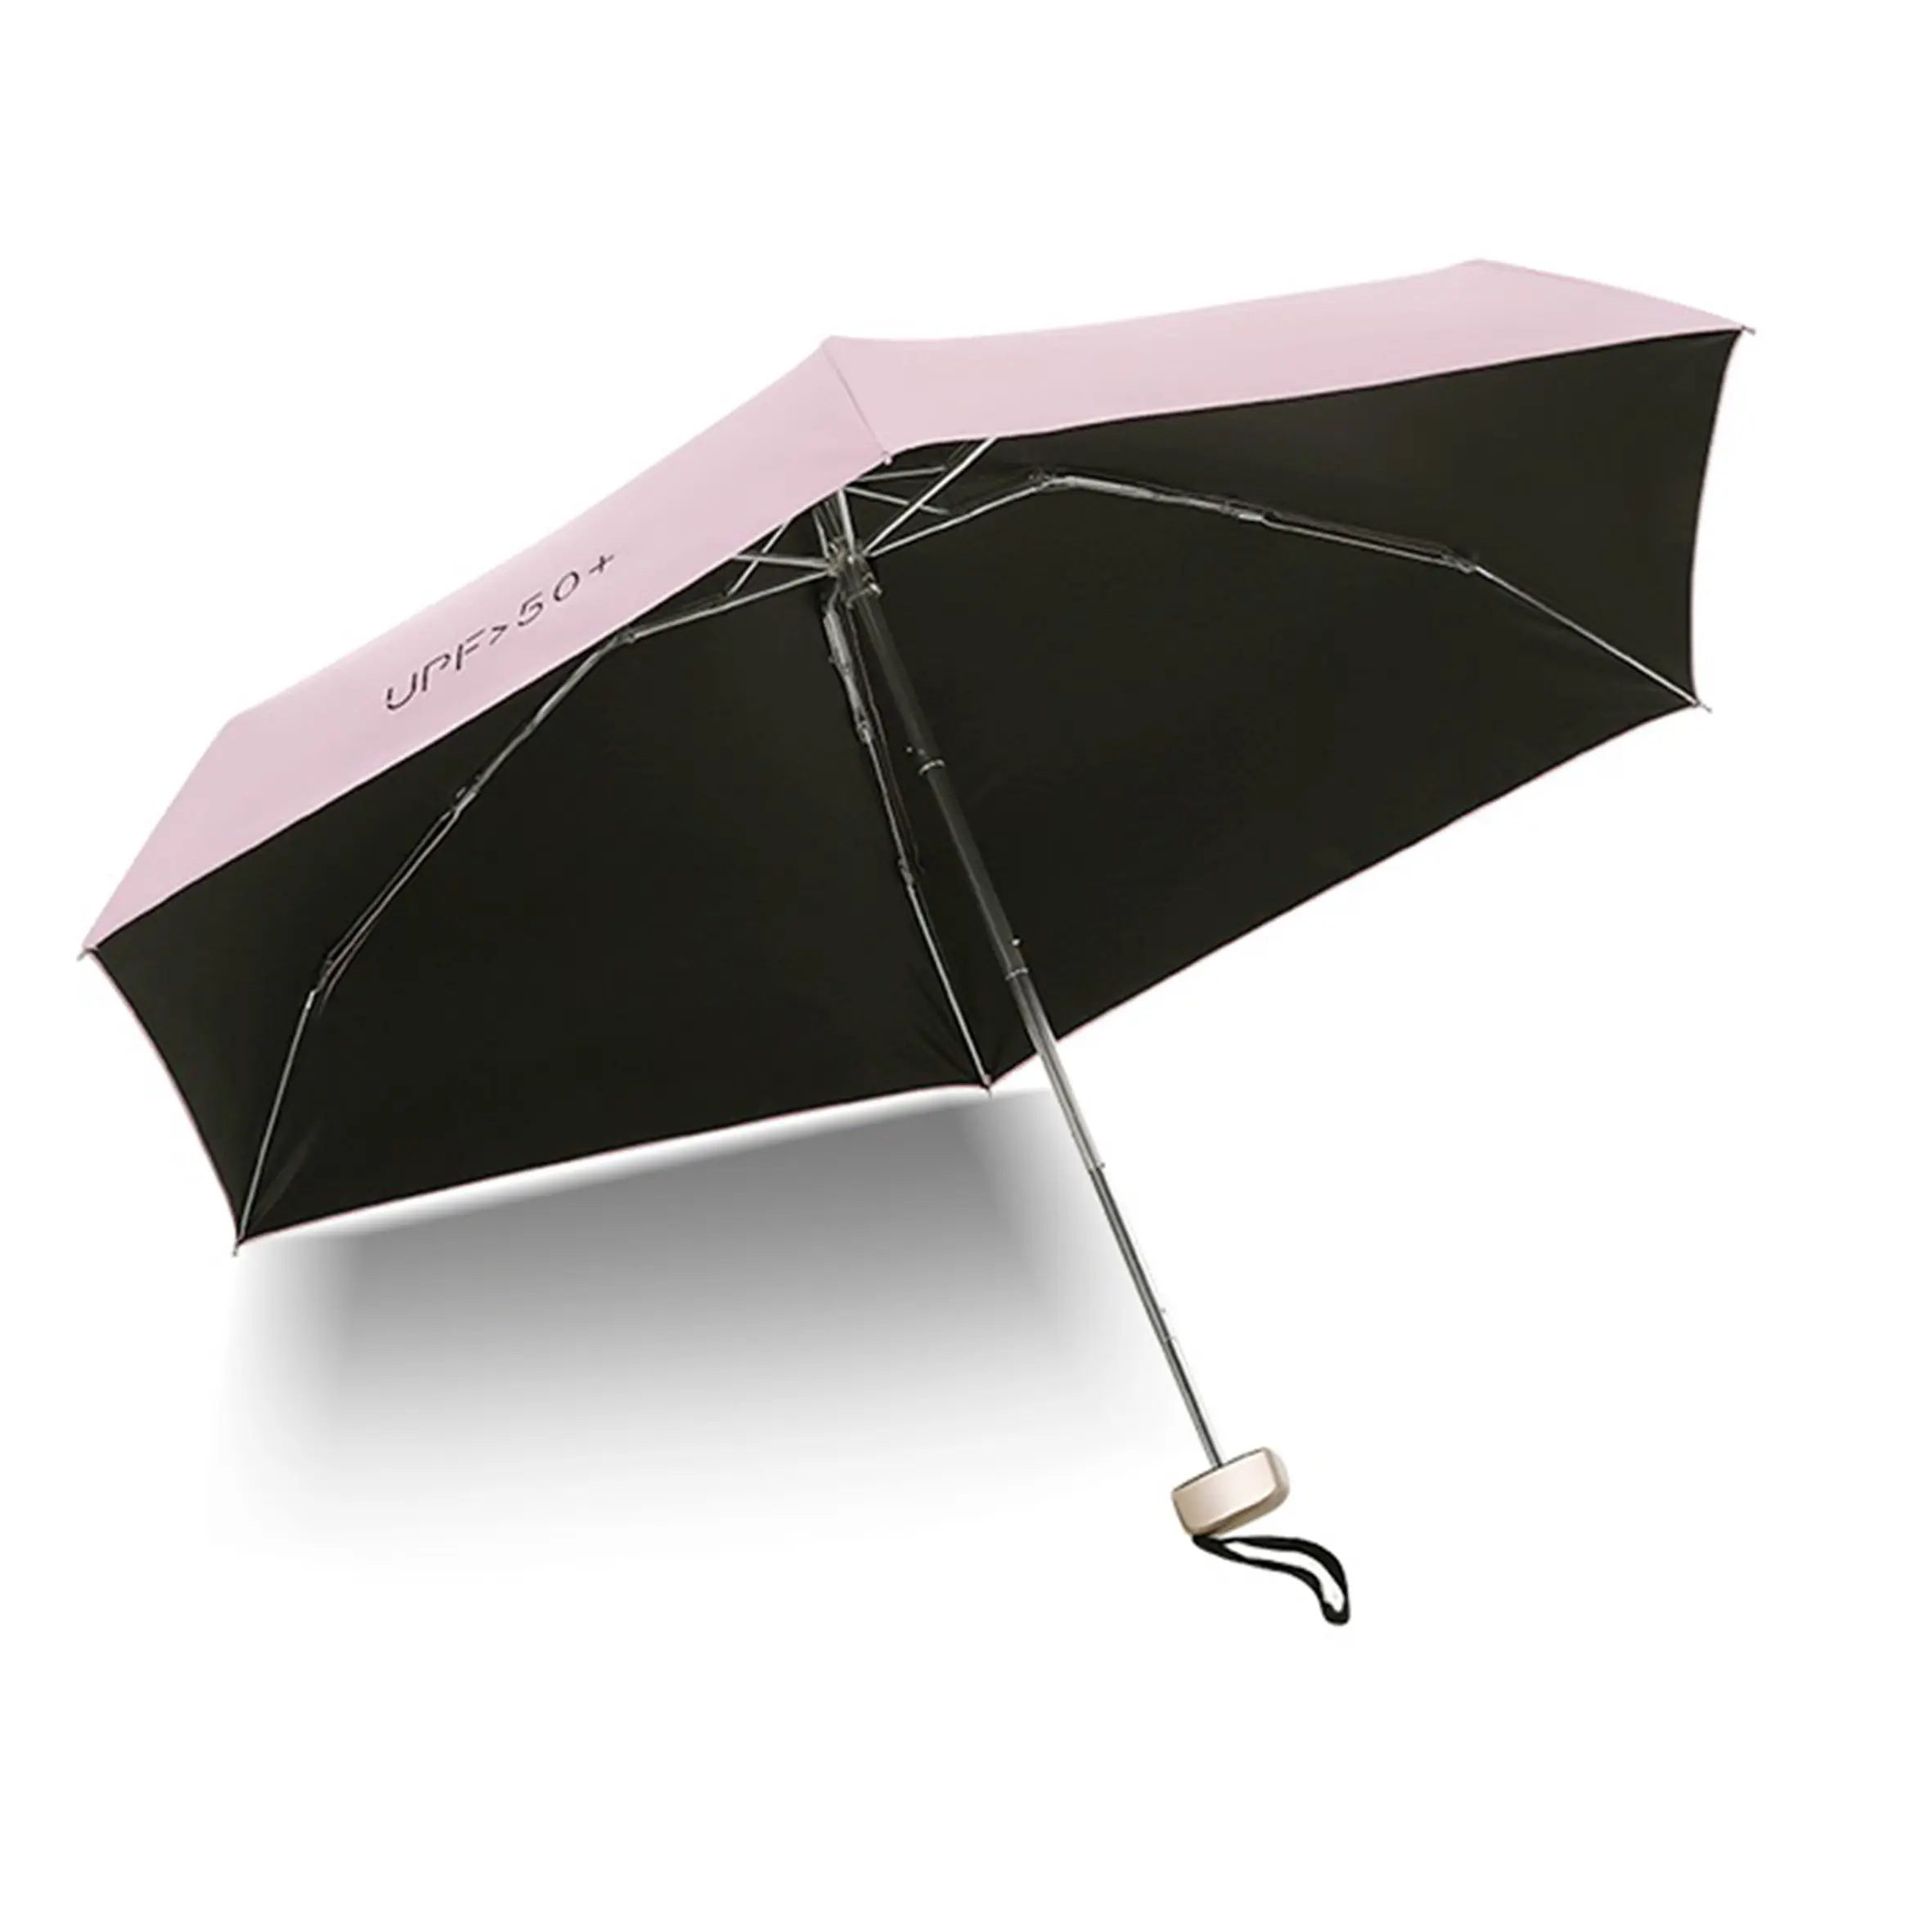 10ft Beige Round Aluminum Patio Umbrellas Outdoor Market Umbrellas with Push,Button Tilt Crank for Garden Terrace Pool/